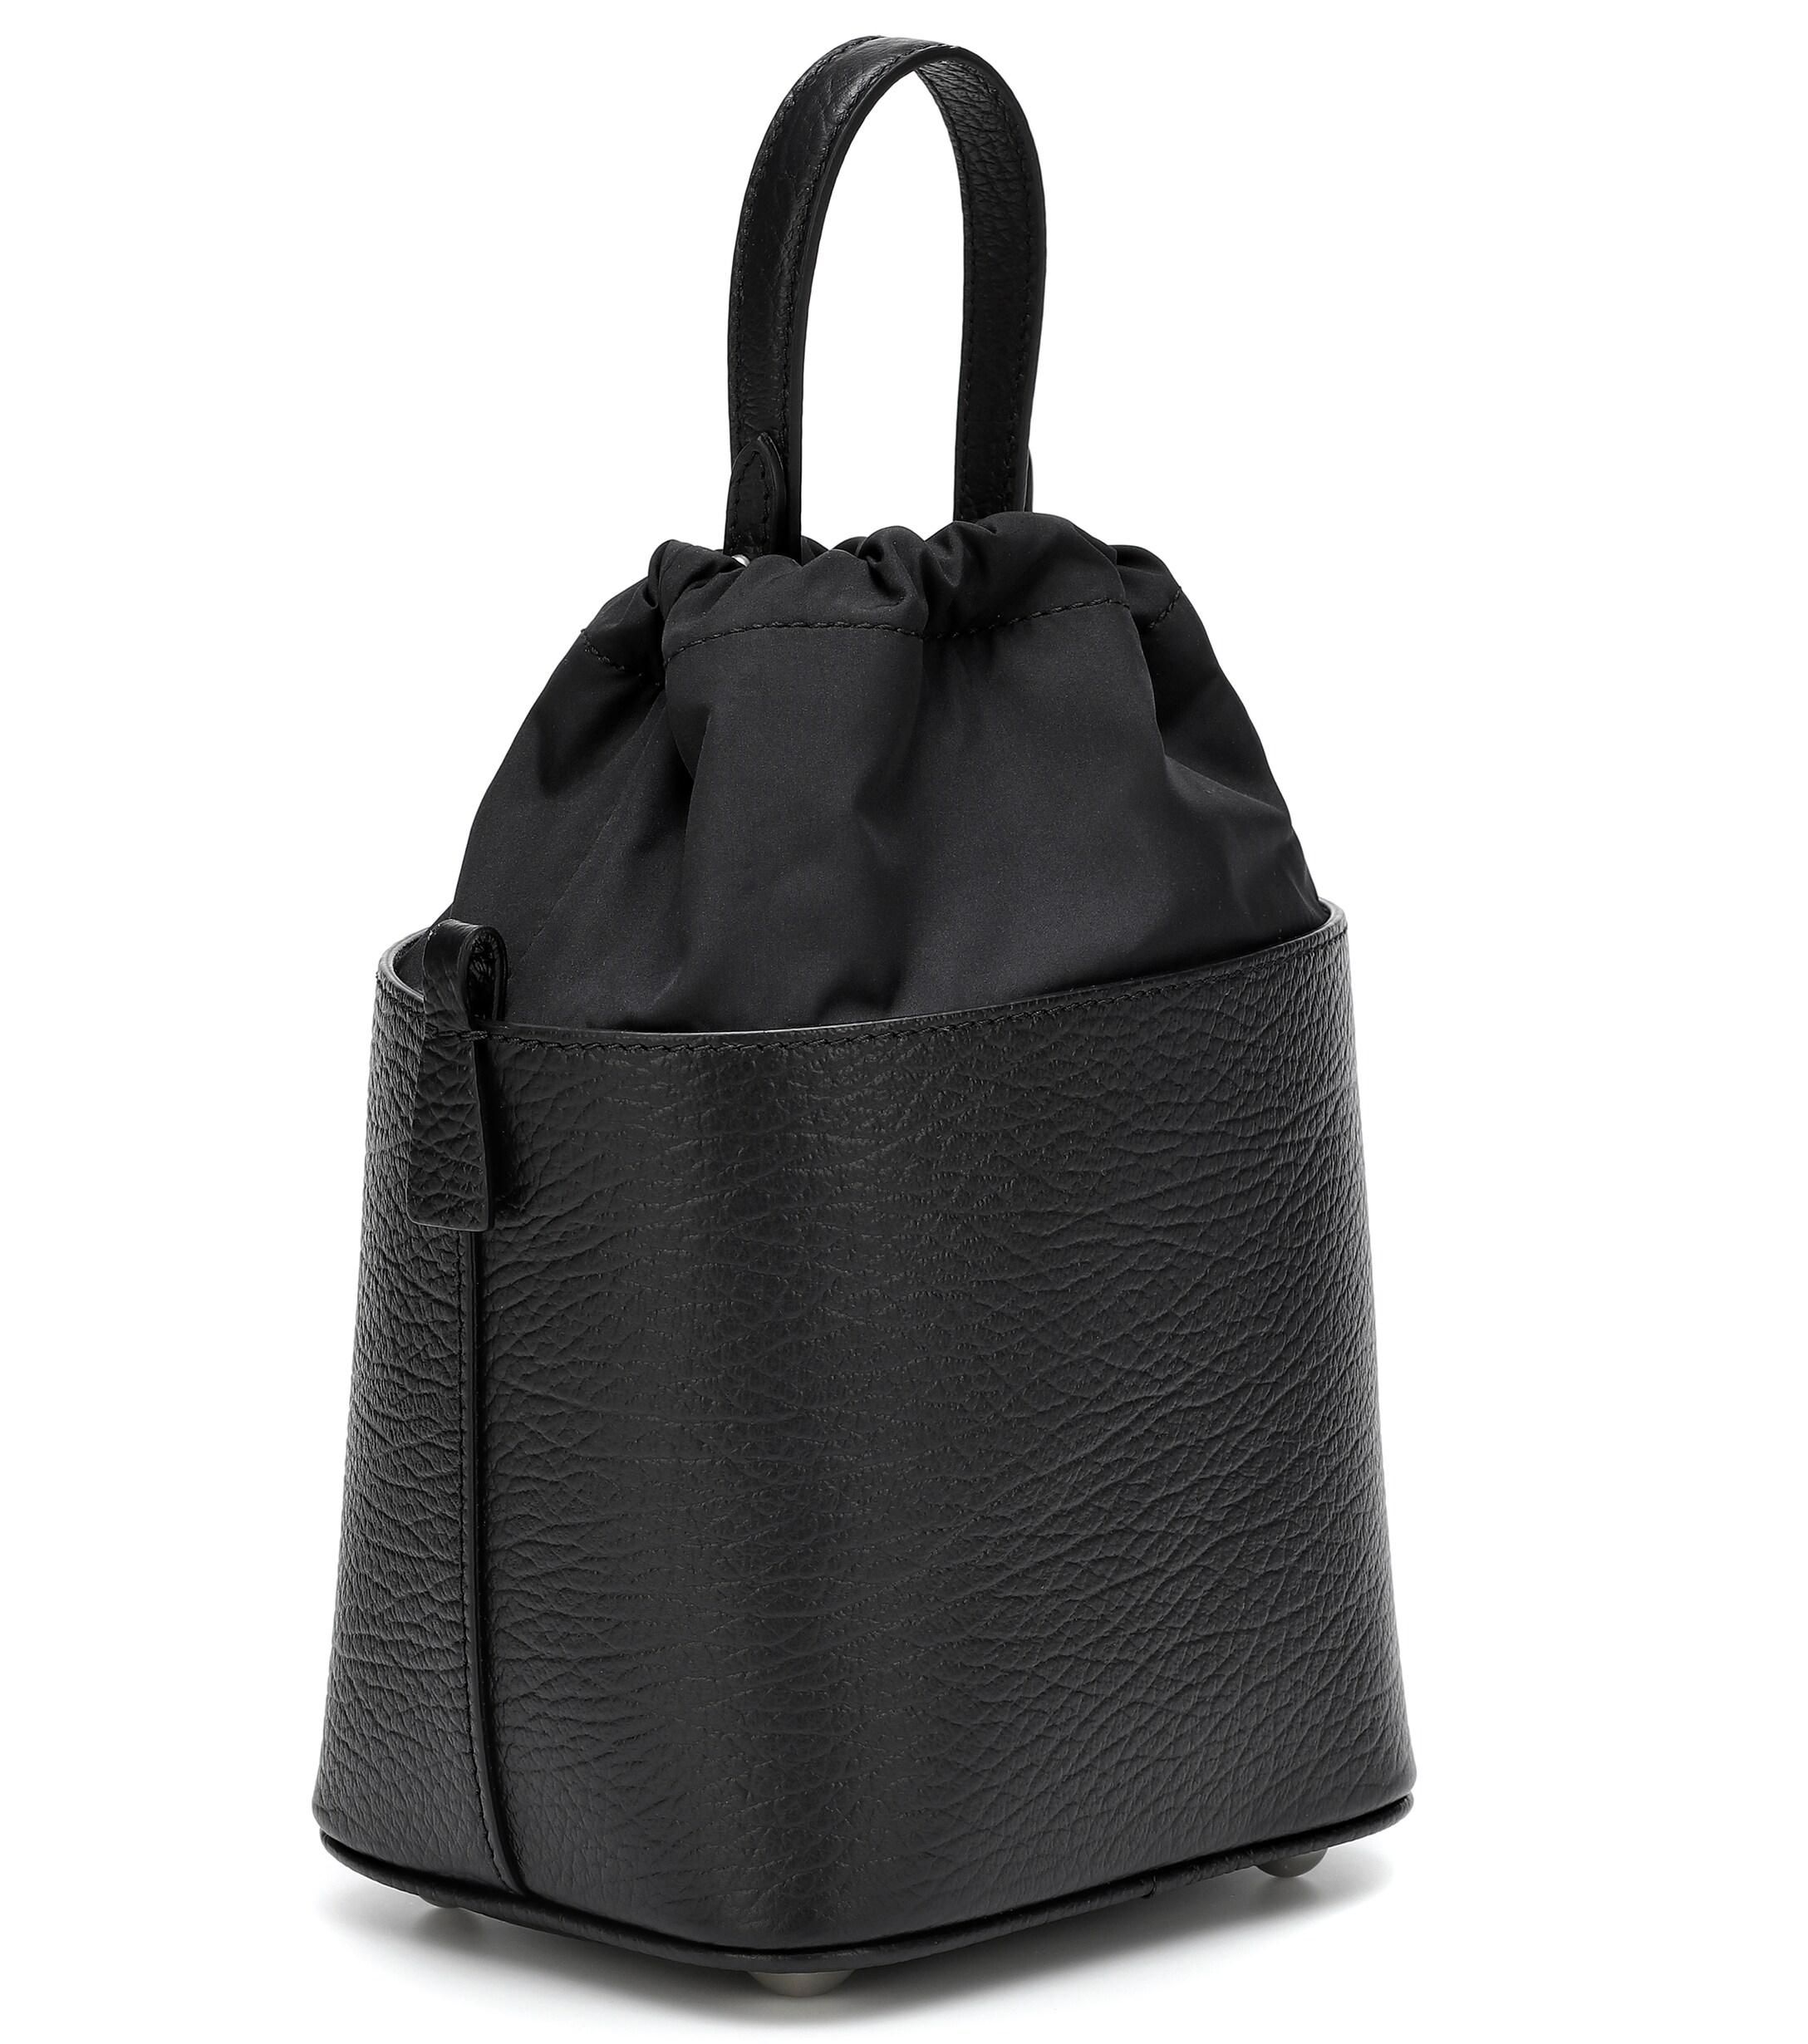 Maison Margiela 5ac Small Leather Bucket Bag in Black - Lyst